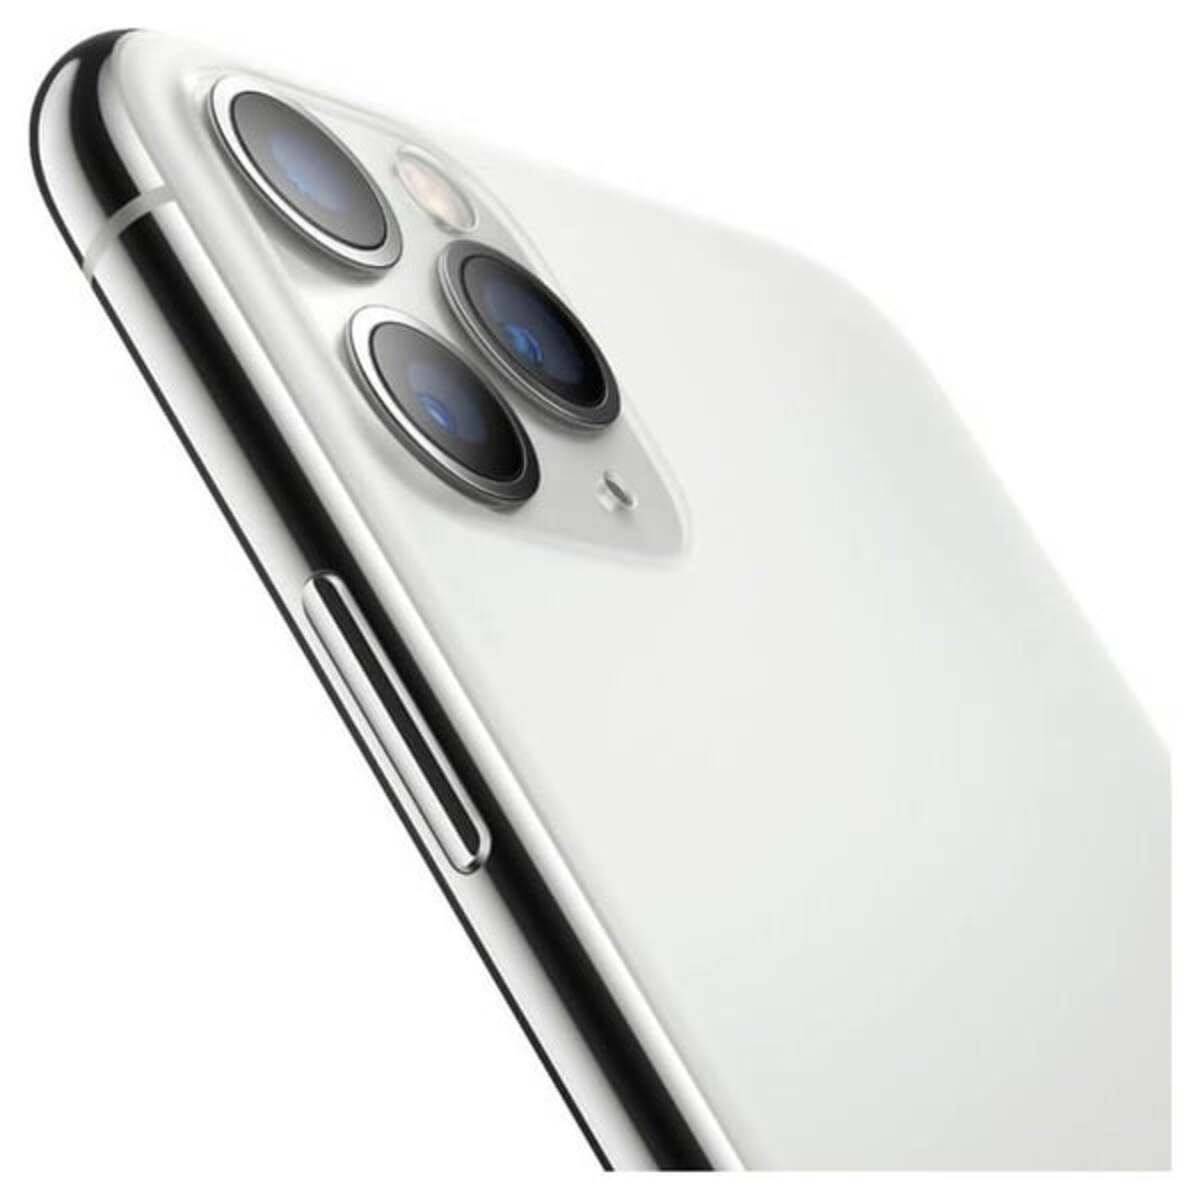 Apple Iphone 11 Pro Max 256gb Silver - International Version